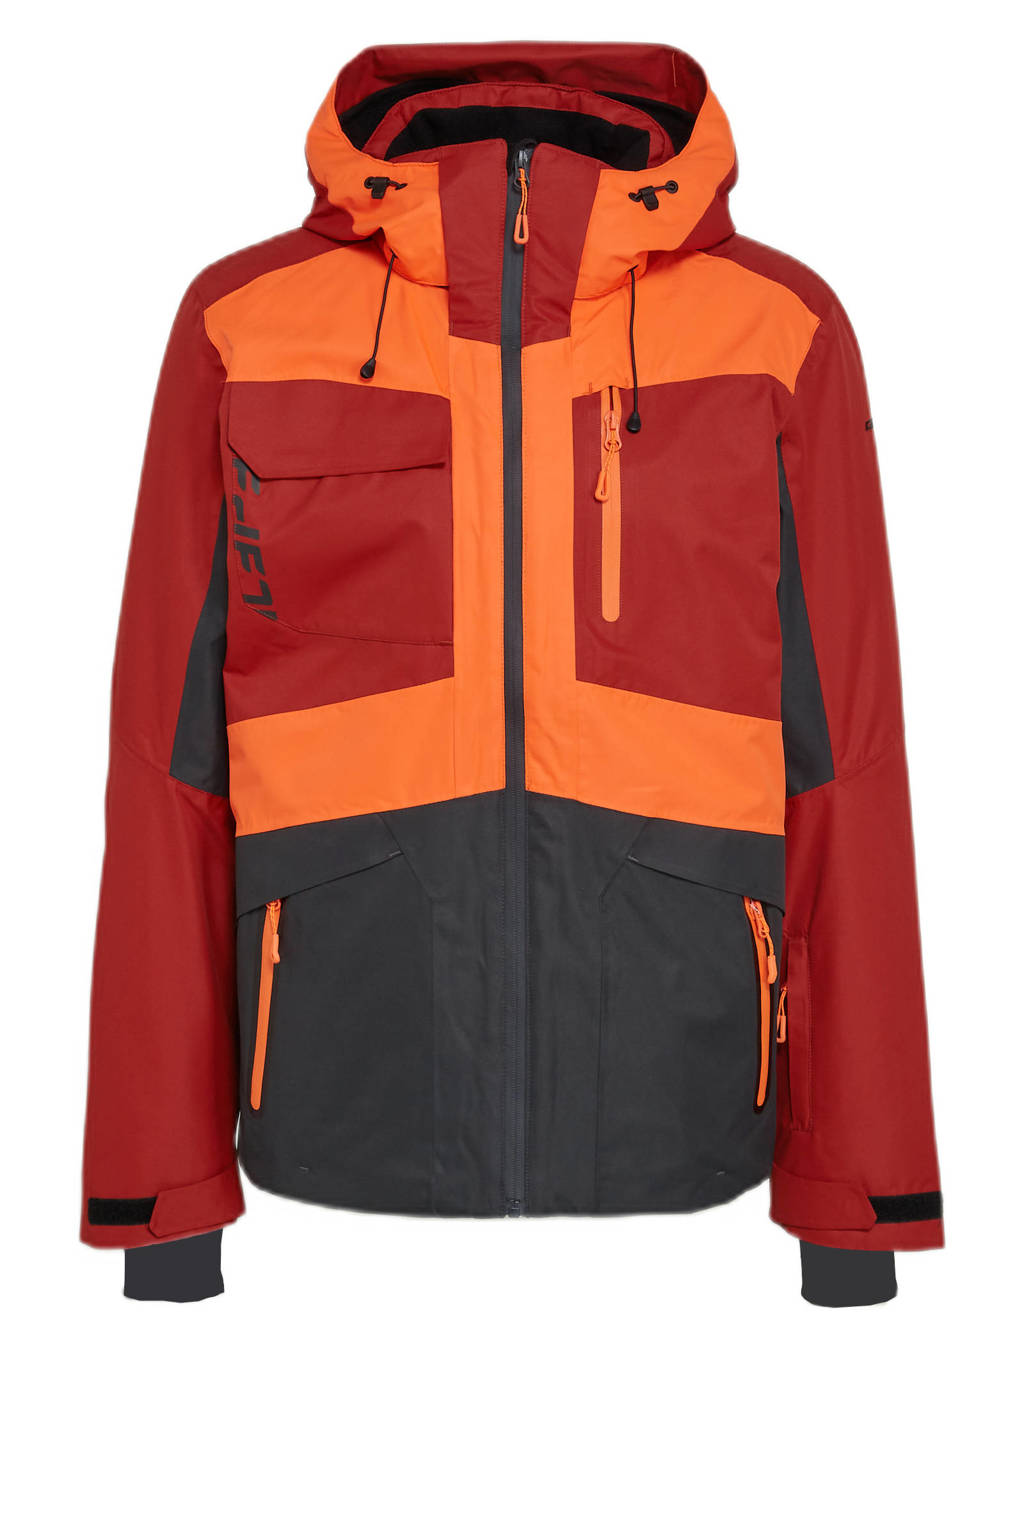 Icepeak ski-jack Crossett oranje/rood/zwart, Oranje/rood/zwart